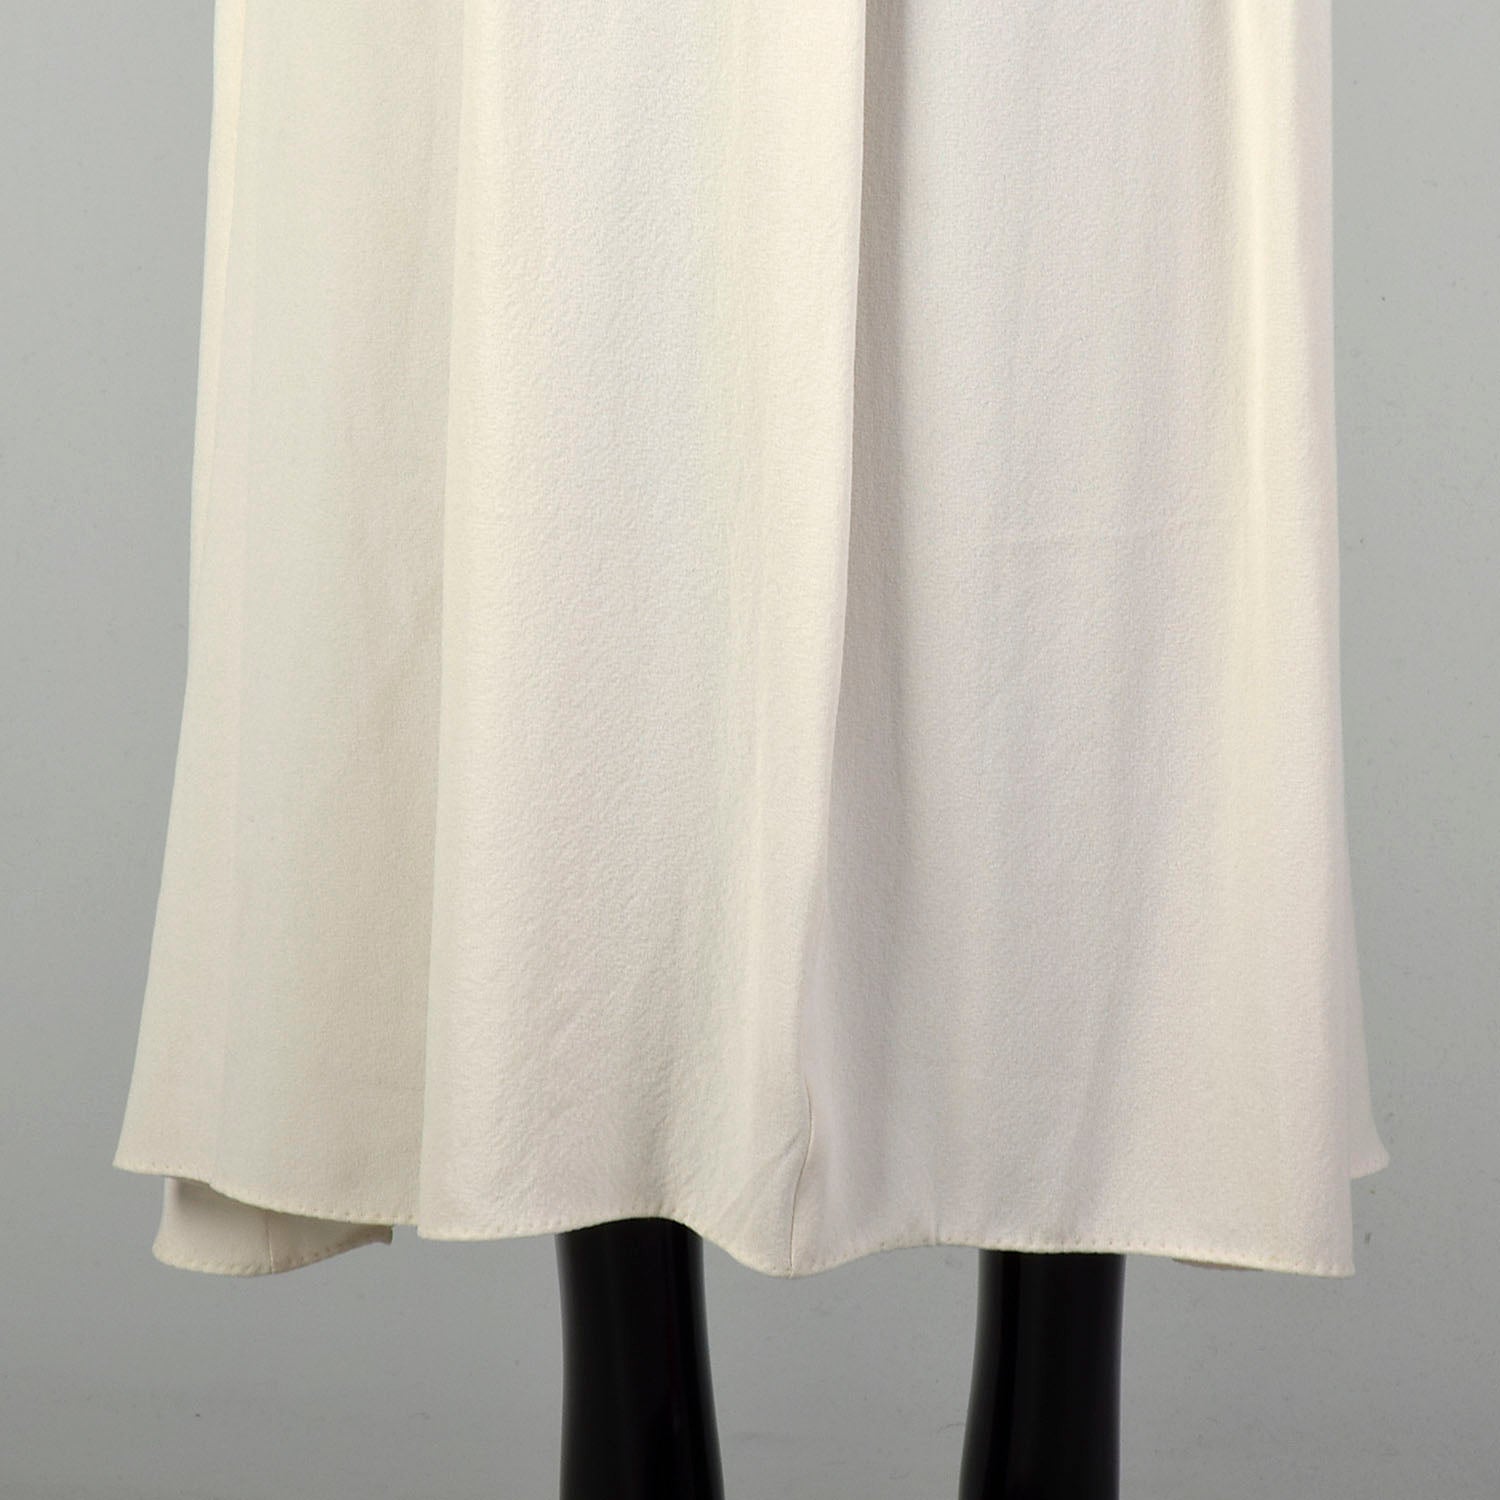 Large 1940s Dress Low Cut Tie Back Waist Crepe Shortsleeve Bridal Wedding Gown